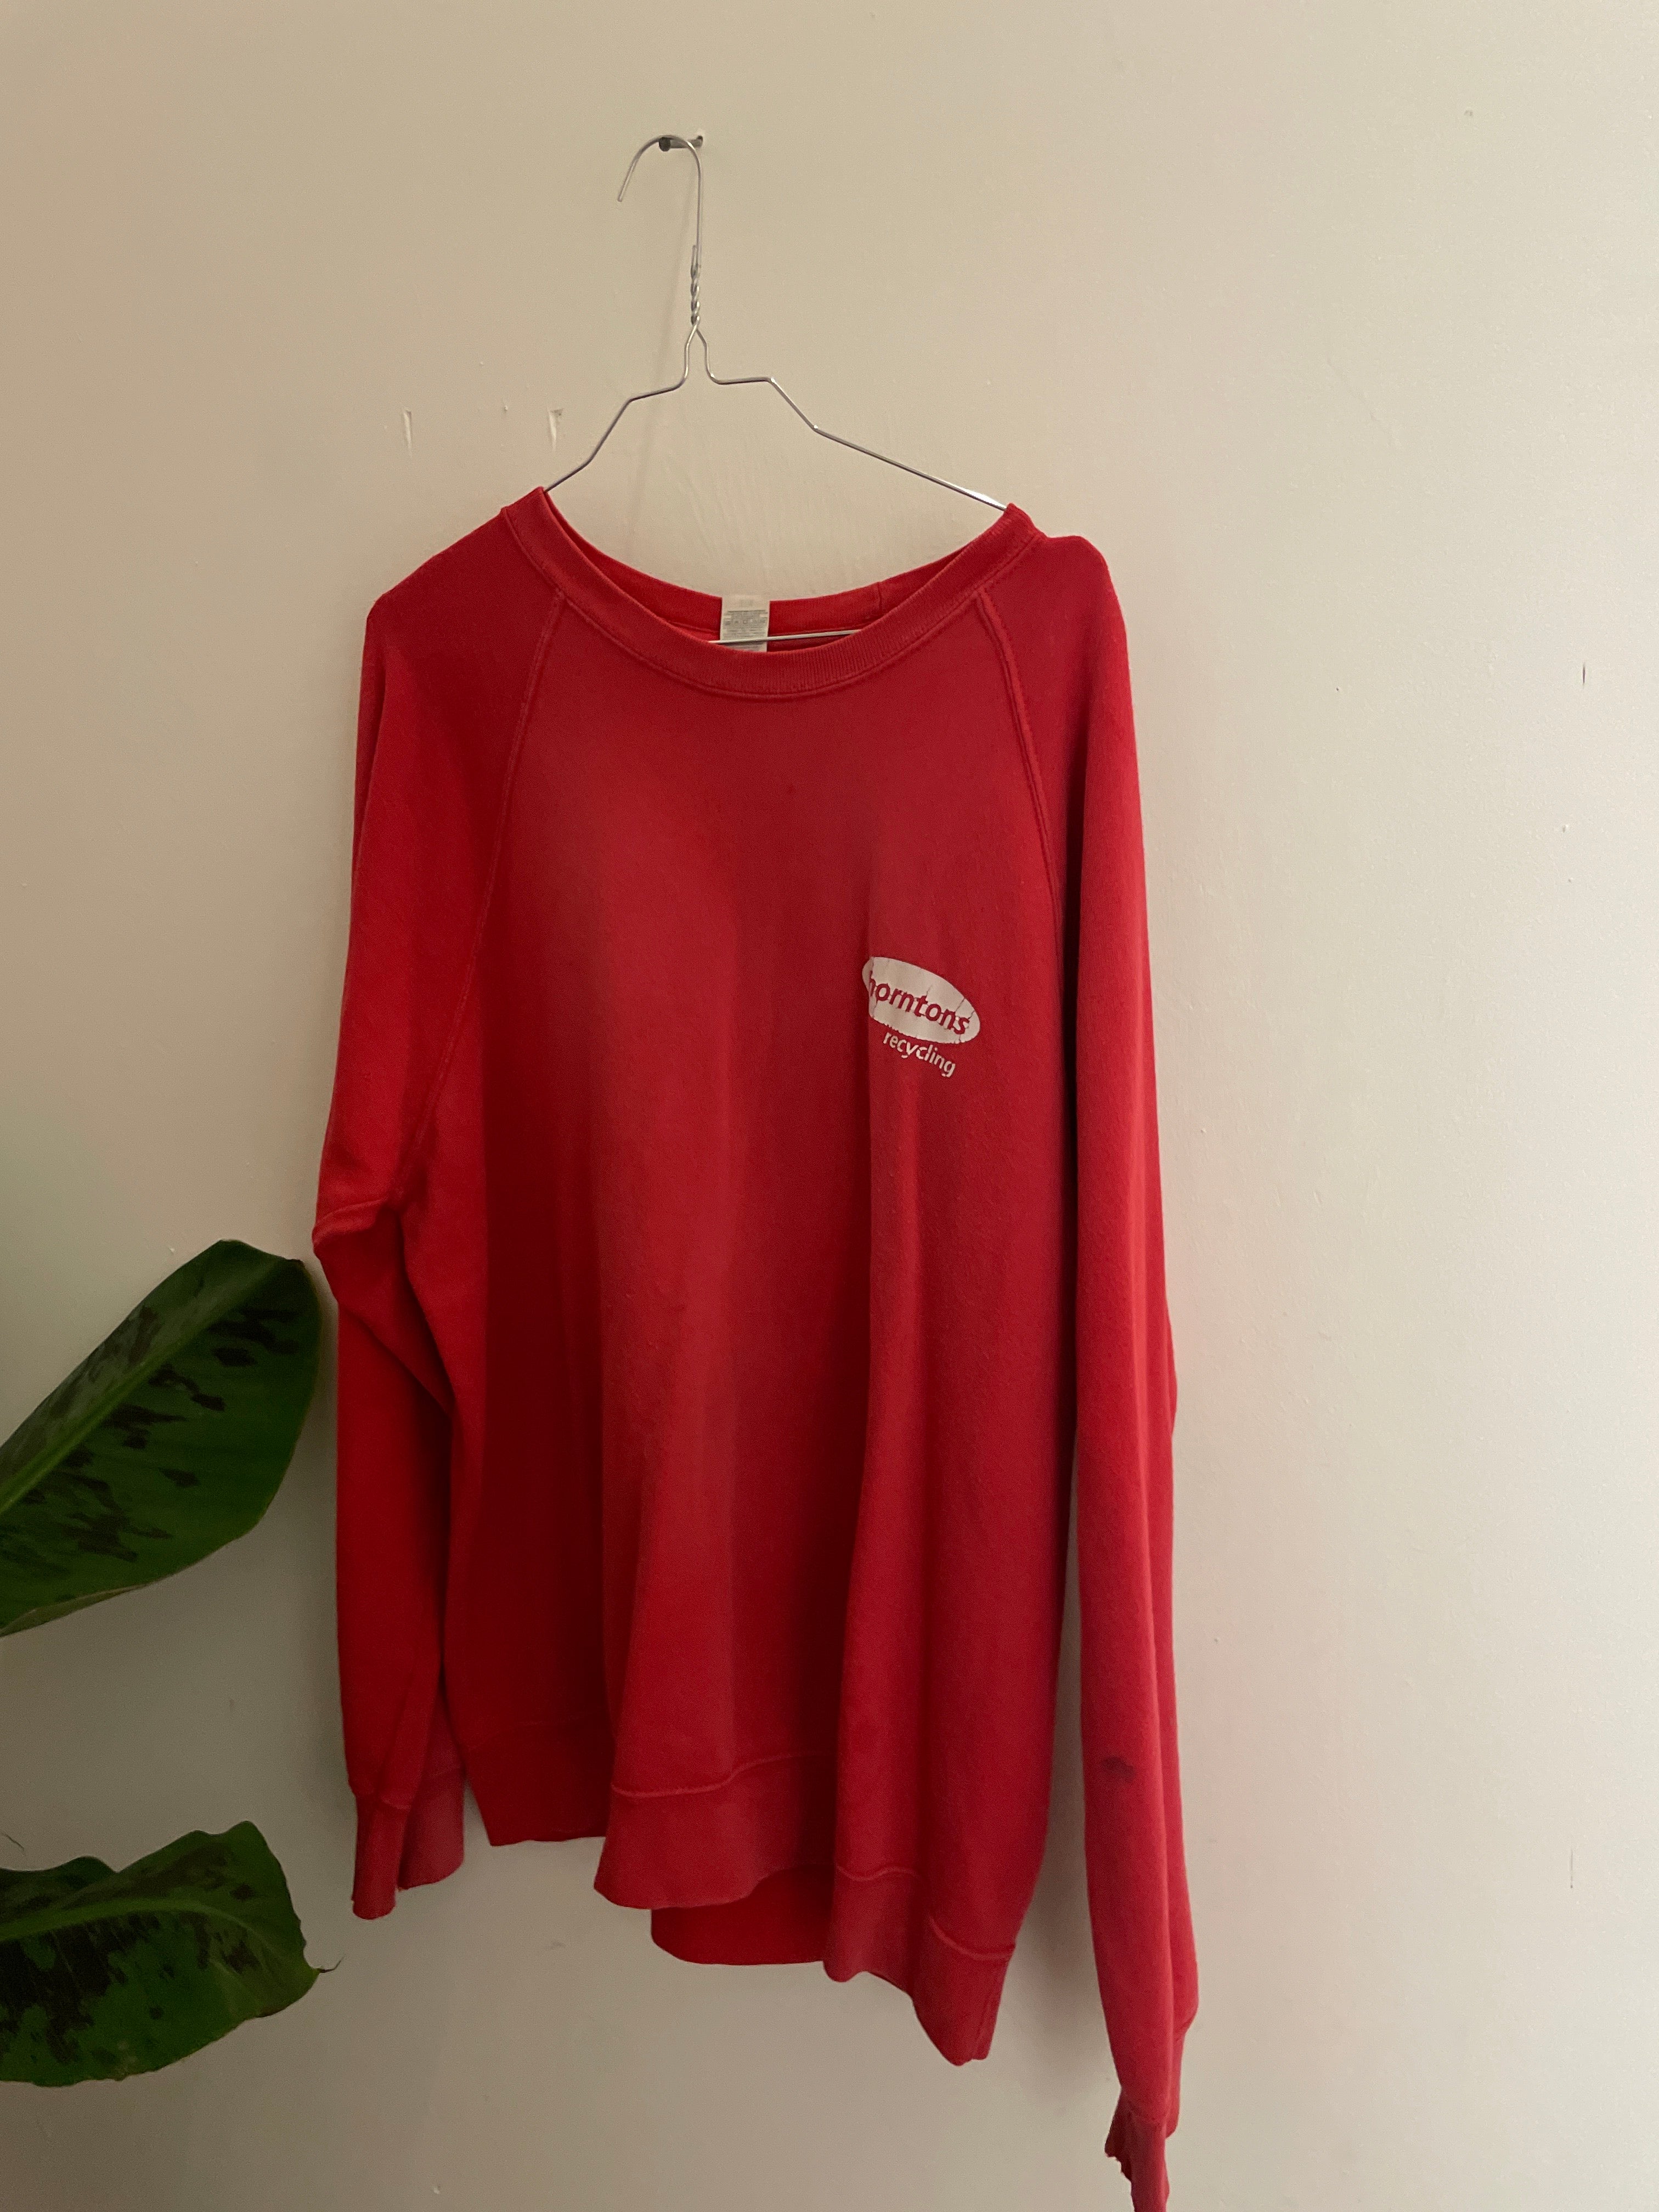 Vintage red fruit of the loom sweatshirt size XL